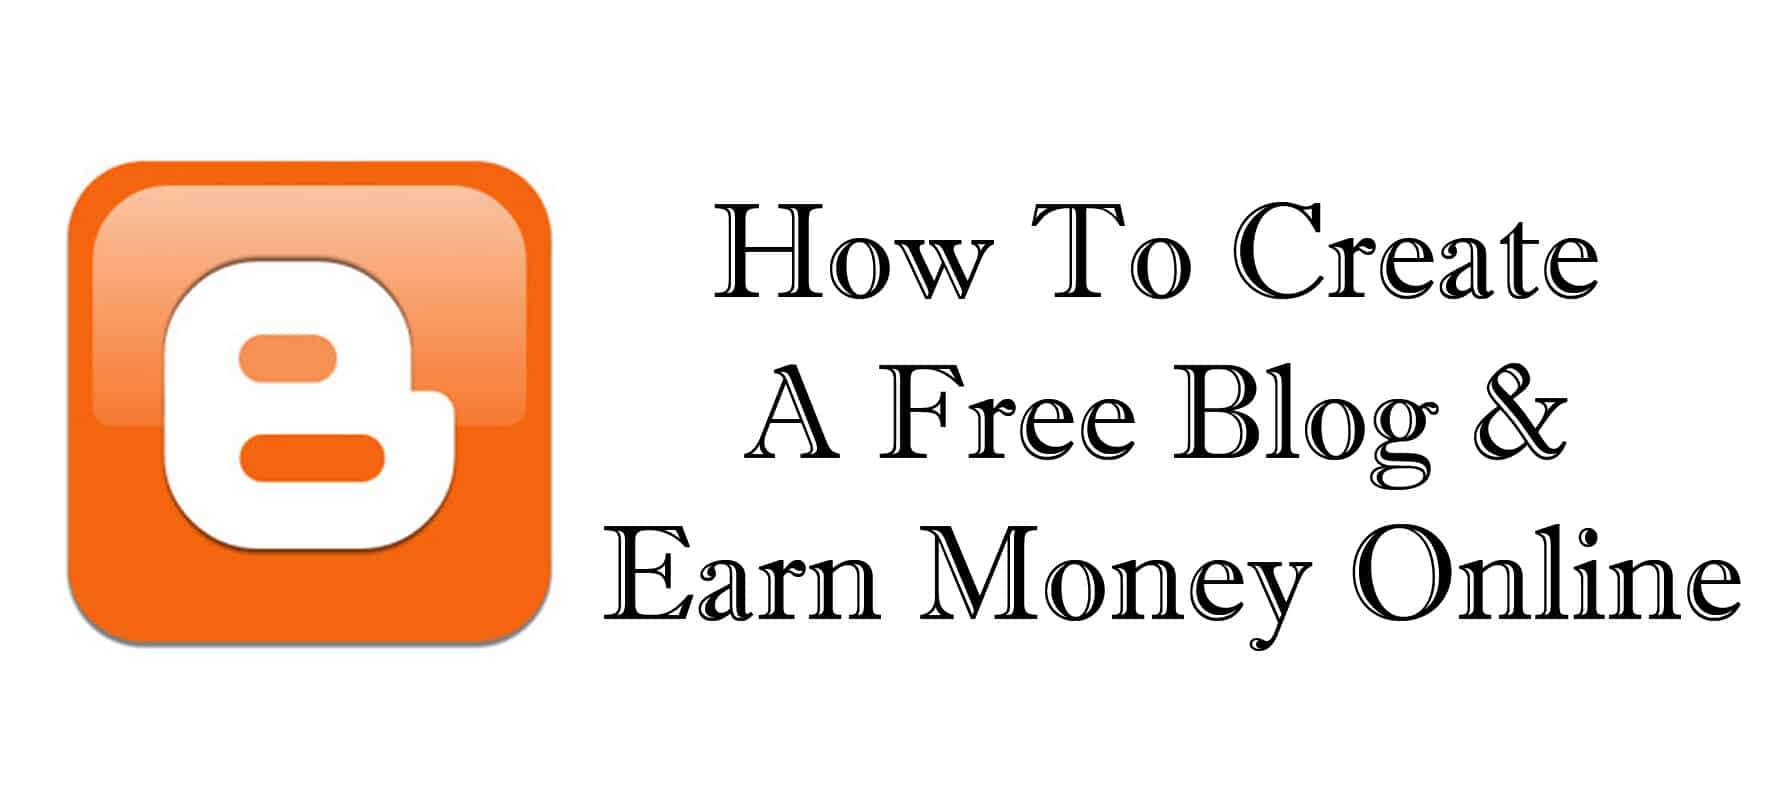 create-a-free-blog-earn-money-online